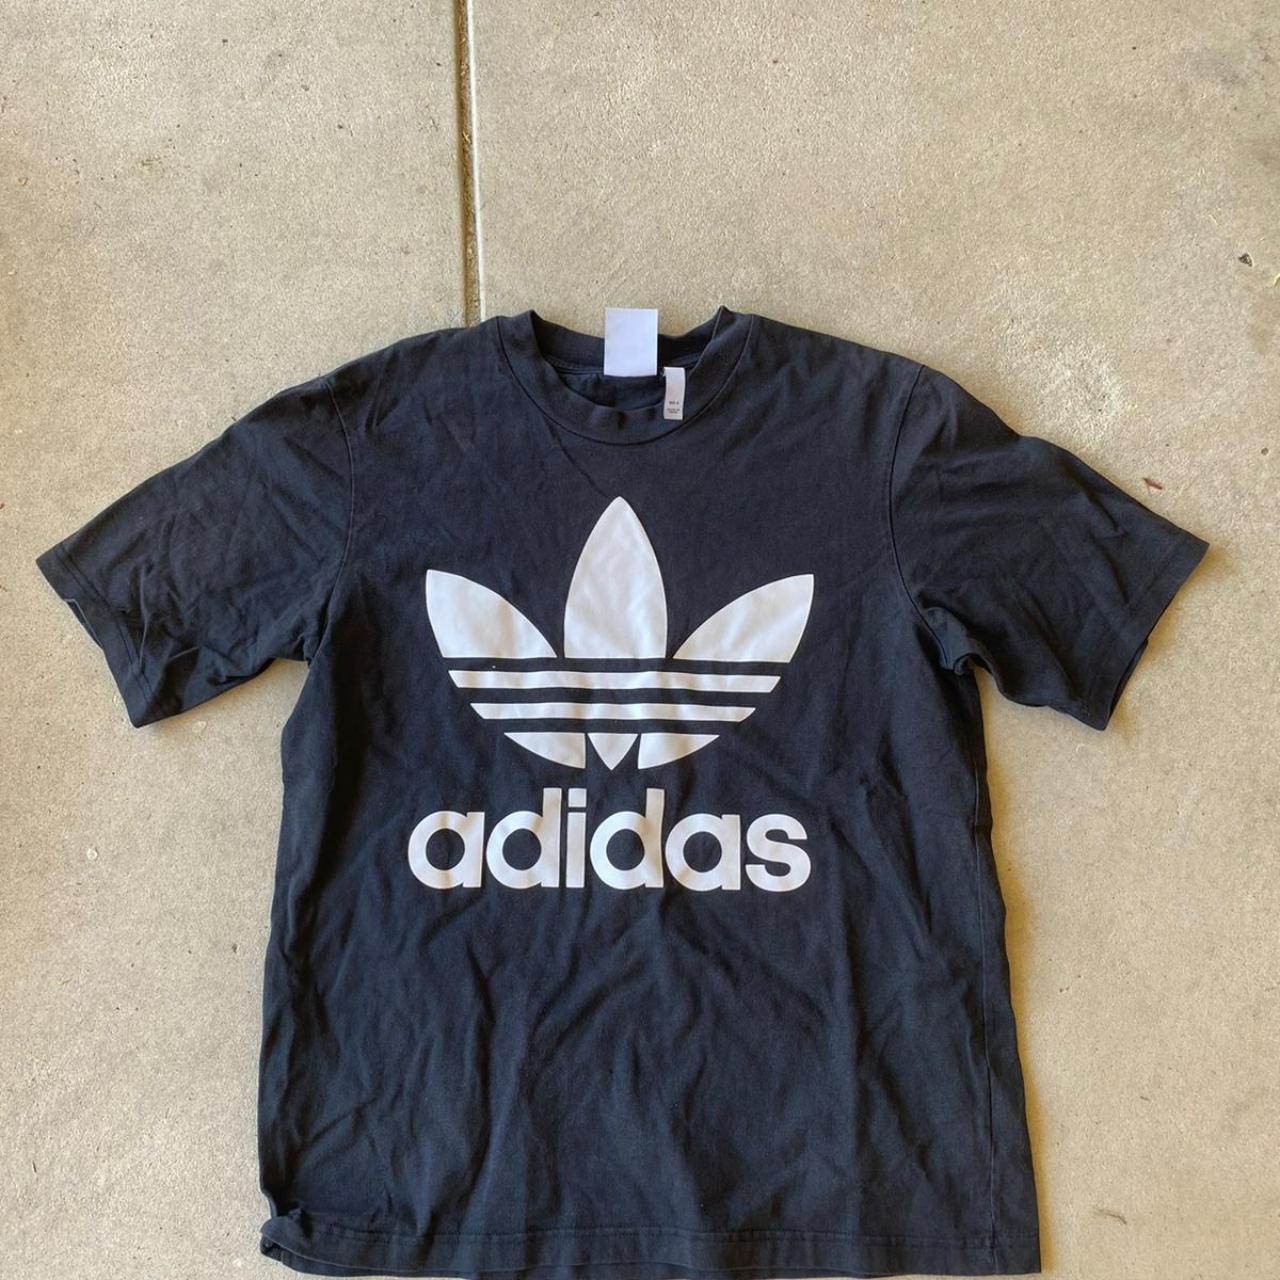 Adidas Tshirt - Depop